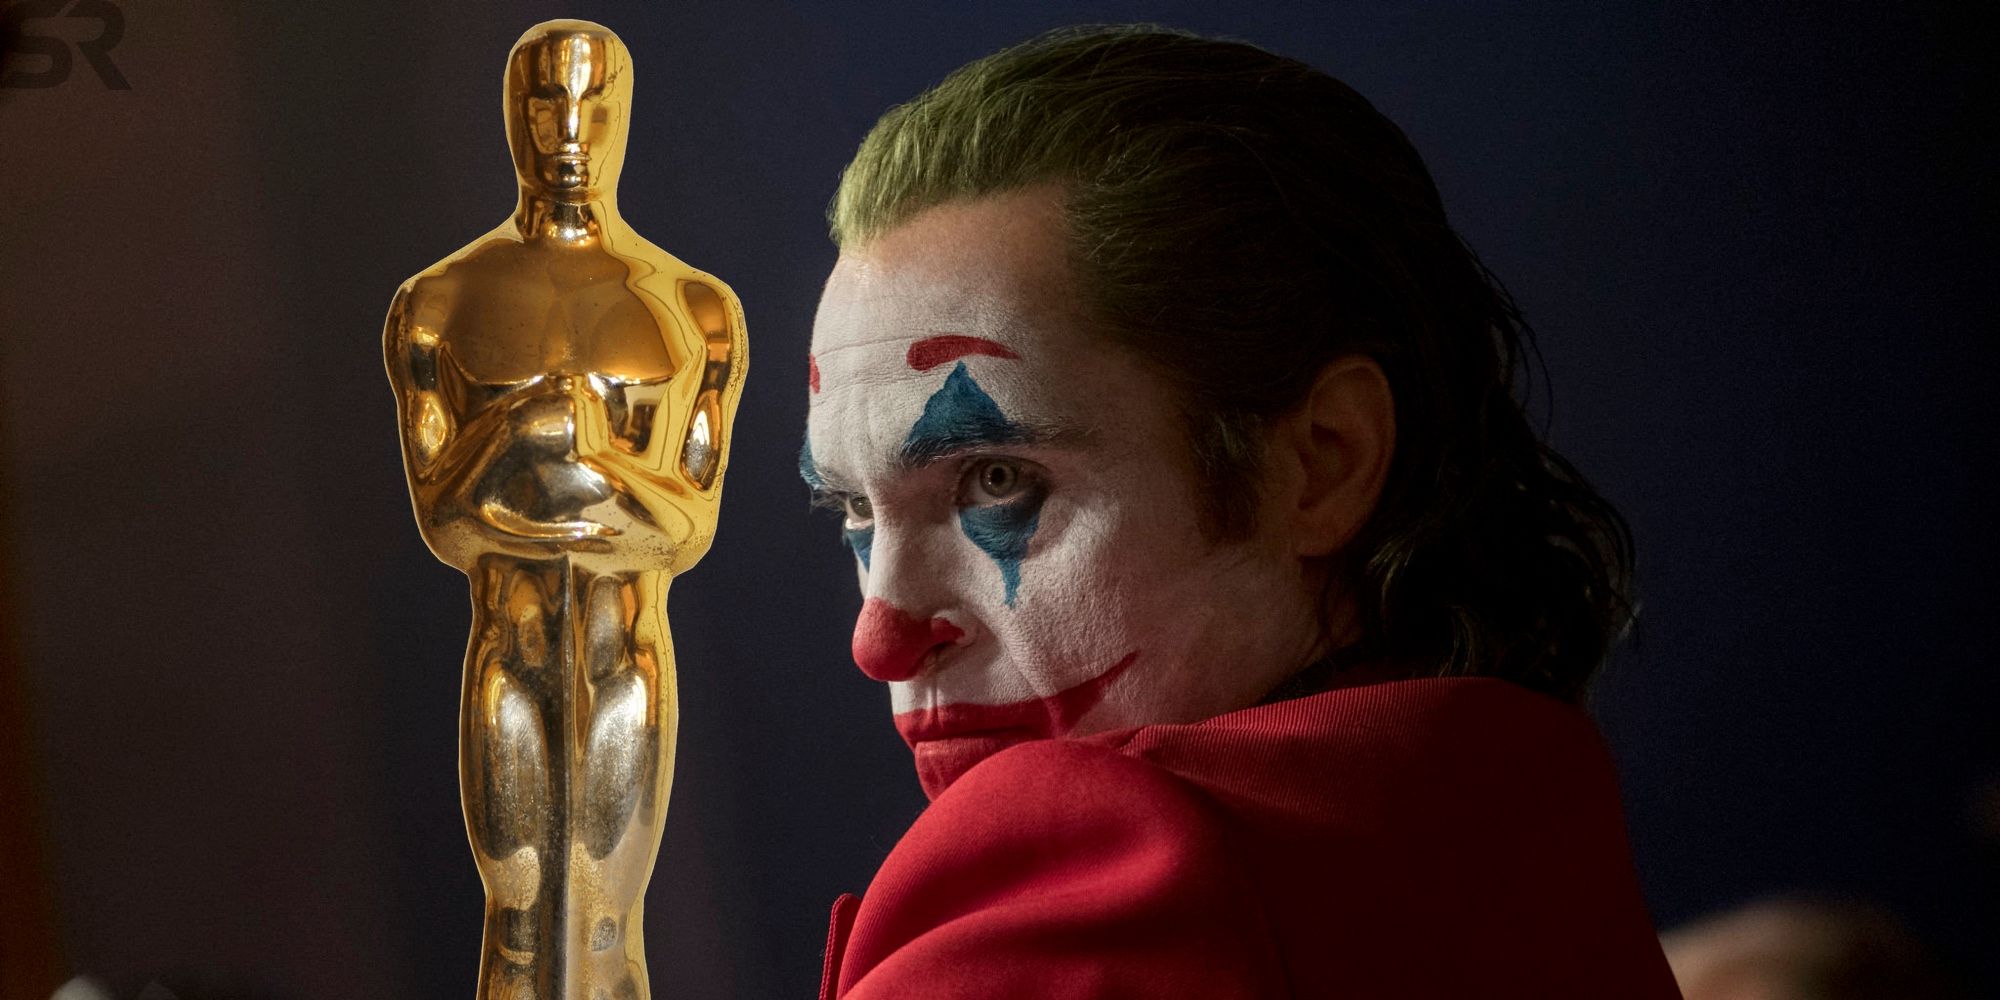 Joker DEFINITELY An Oscar Contender, Says Venice Film Festival Chief